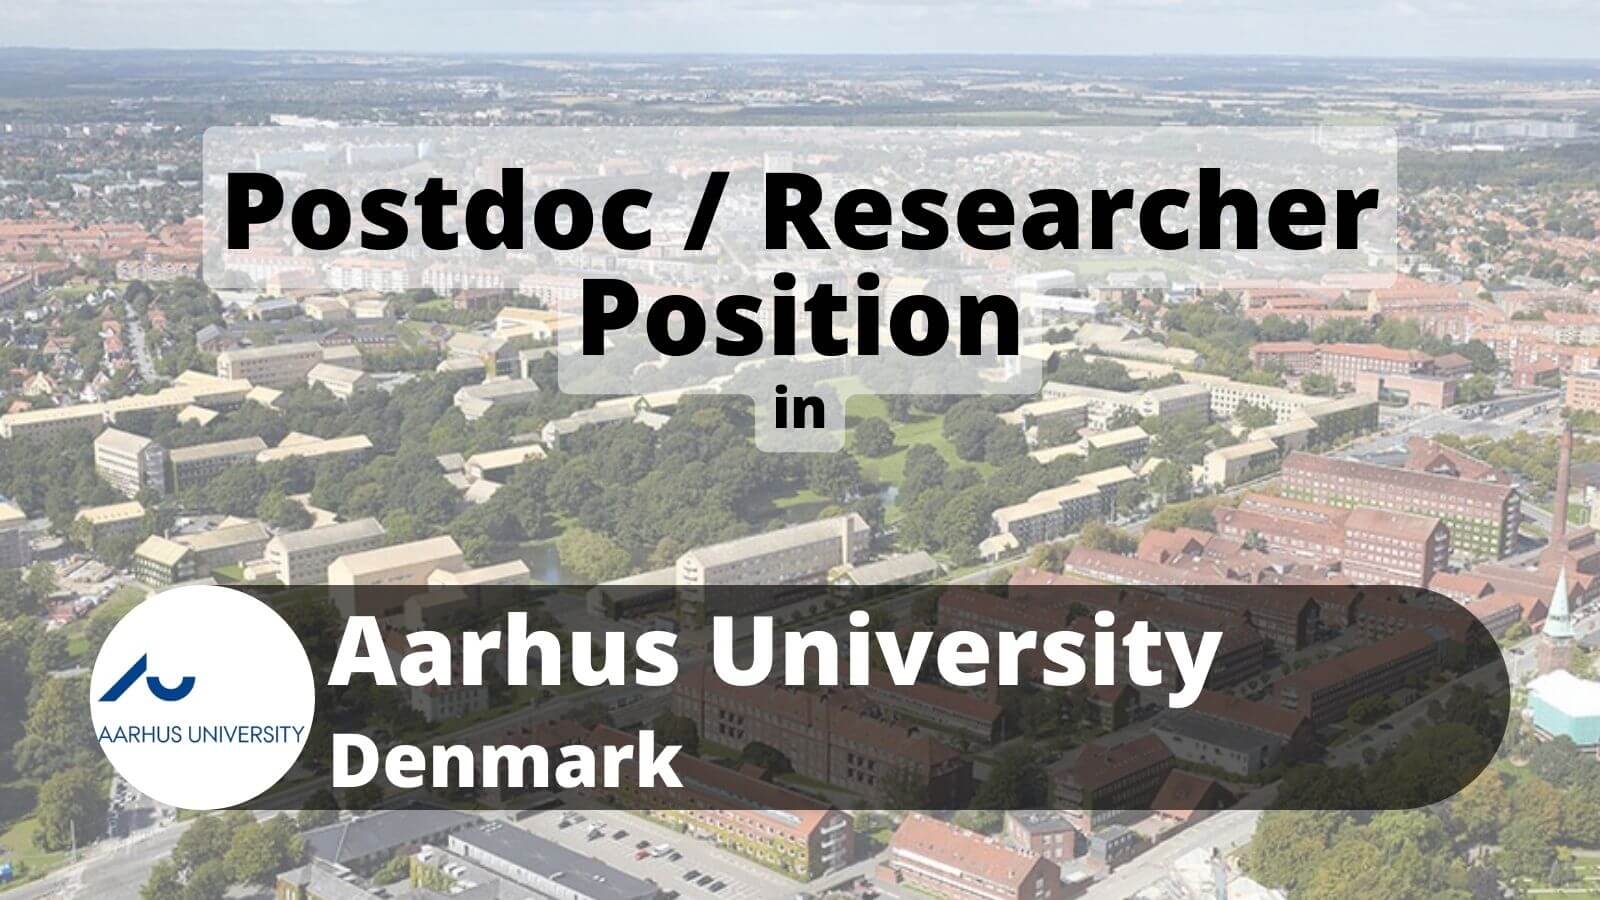 Postdoc jobs or Researcher Position in Aarhus University